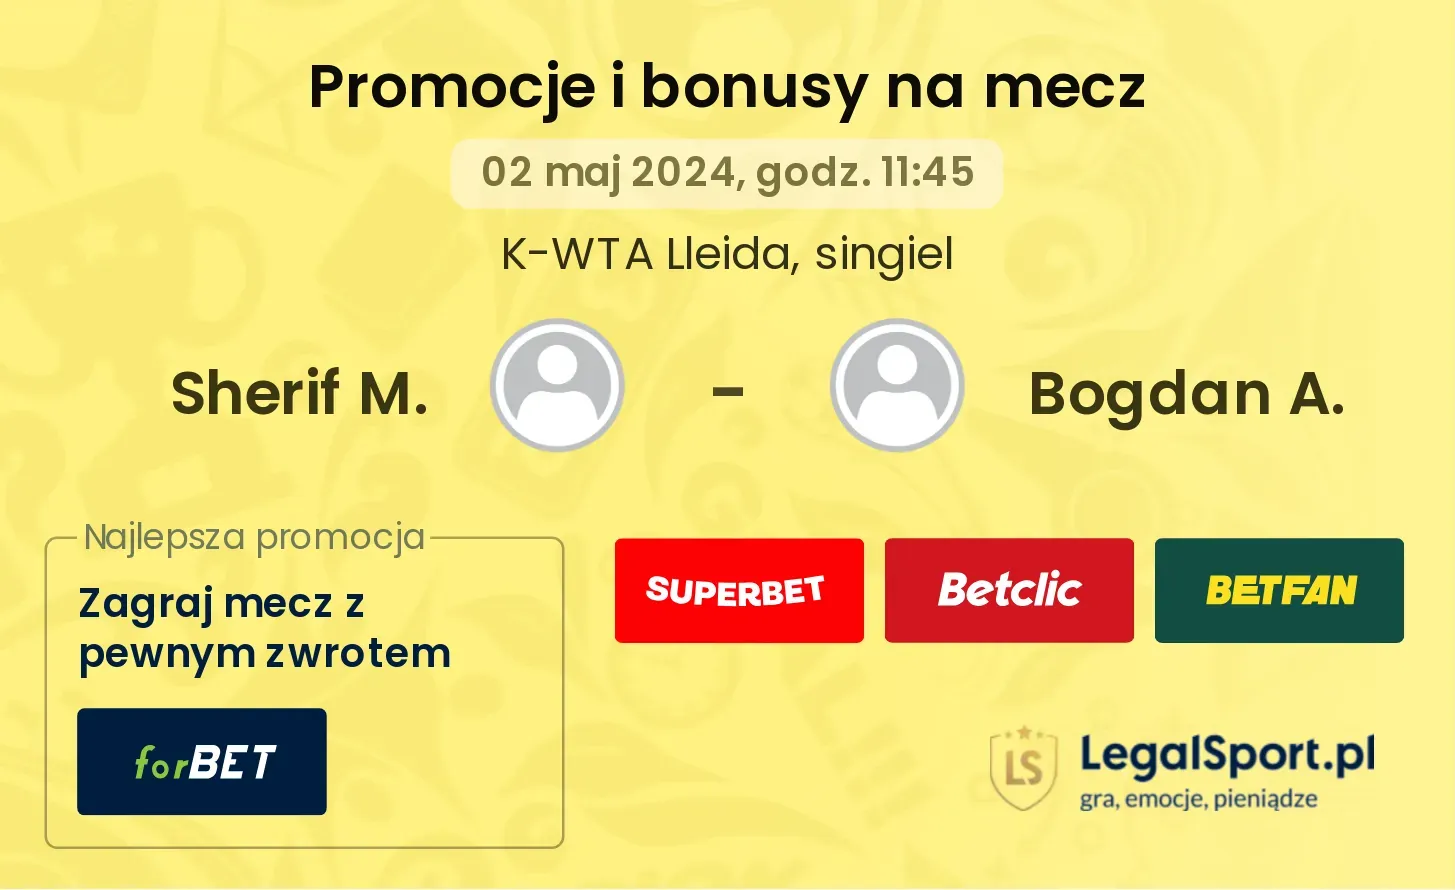 Sherif M. - Bogdan A. promocje bonusy na mecz